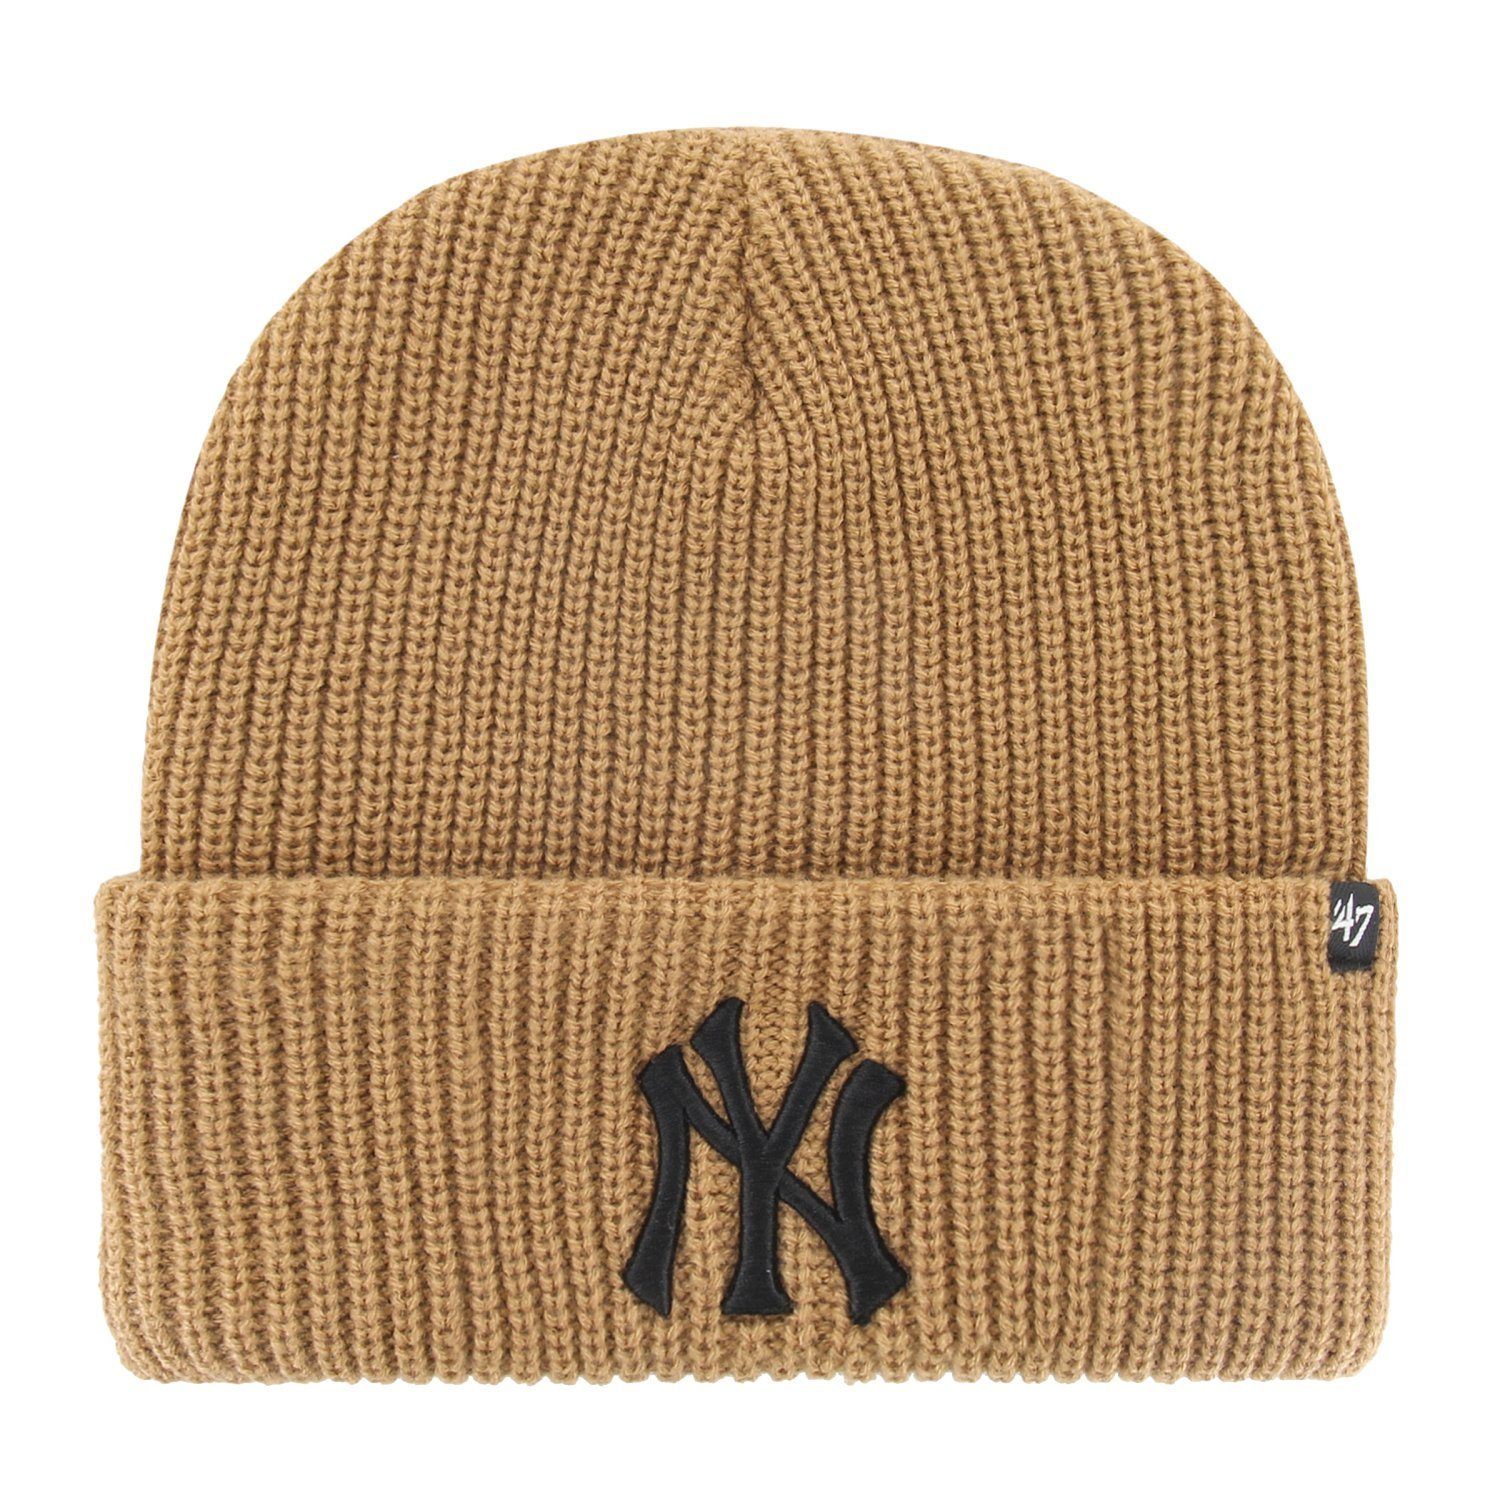 '47 Brand Fleecemütze Beanie UPPER New York Yankees